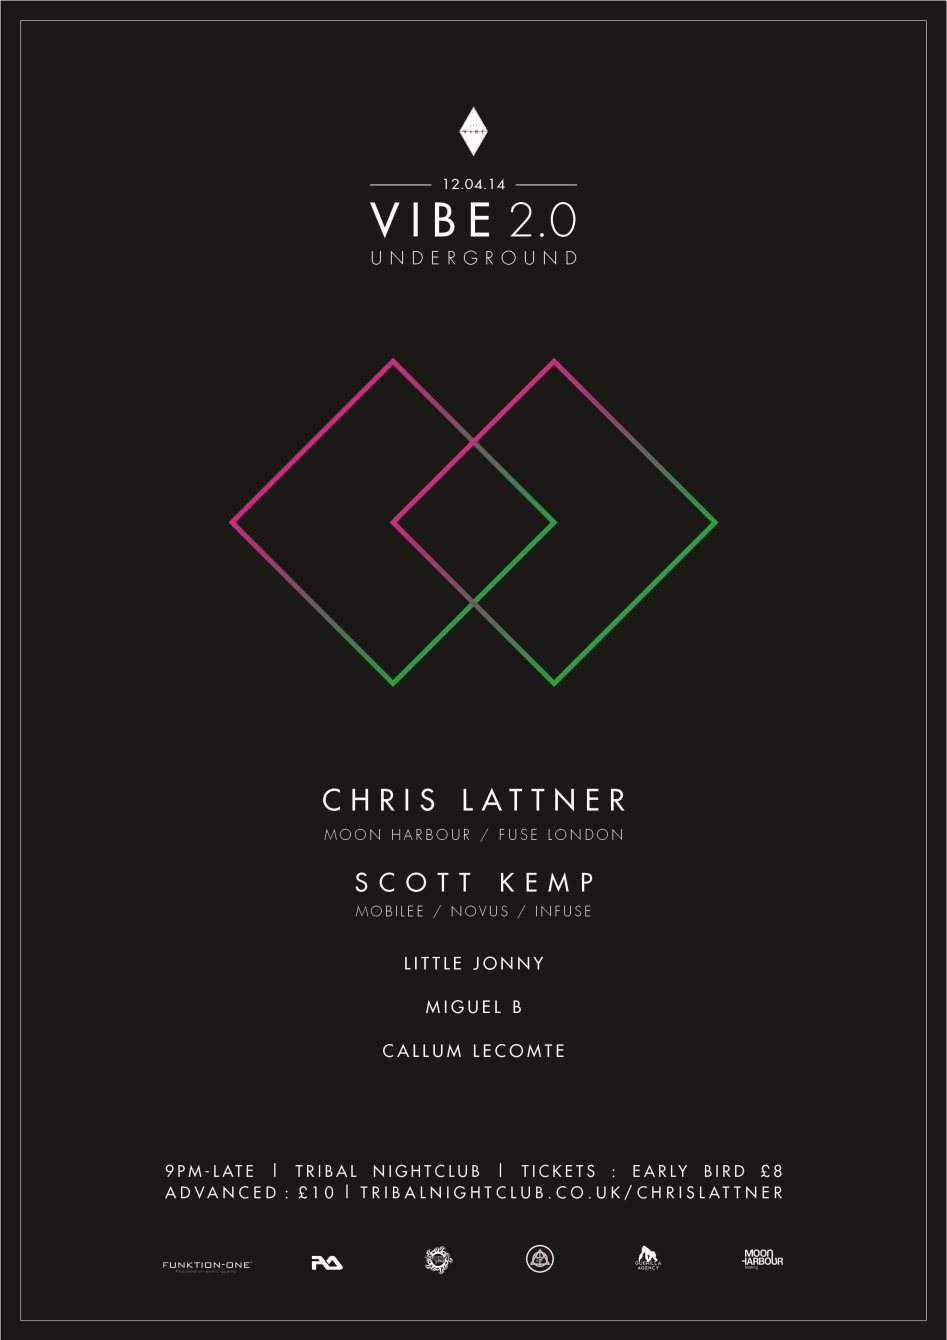 Vibe 2.0 Feat. Chris Lattner & Scott Kemp - フライヤー表